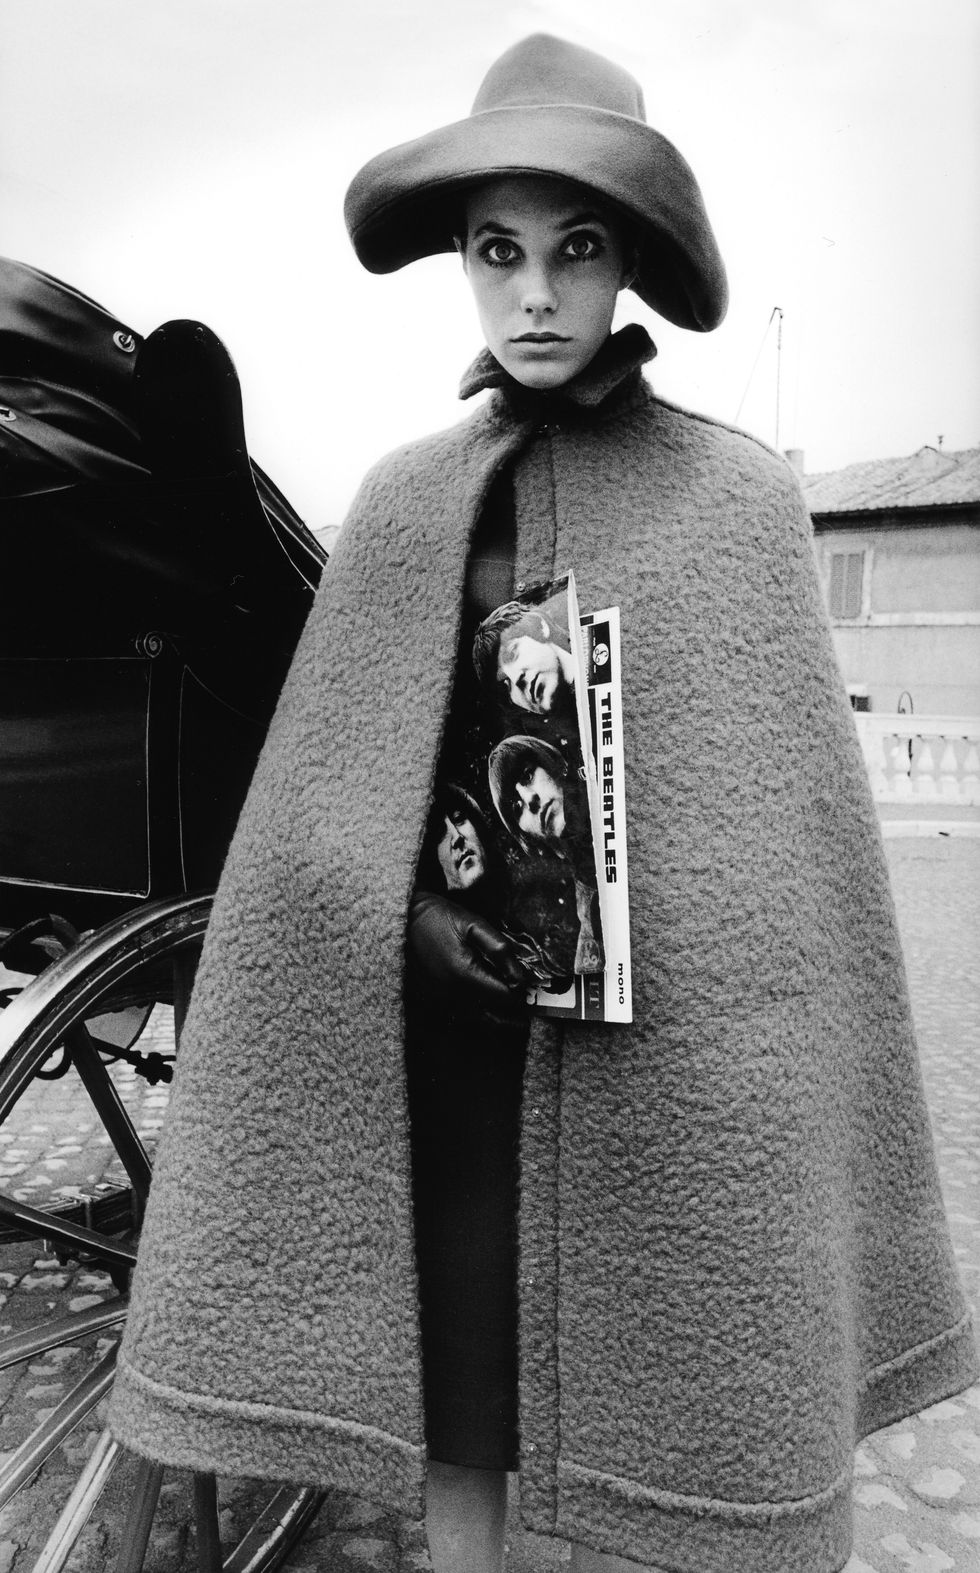 Jane Birkin's Legacy of Fashion and Charity